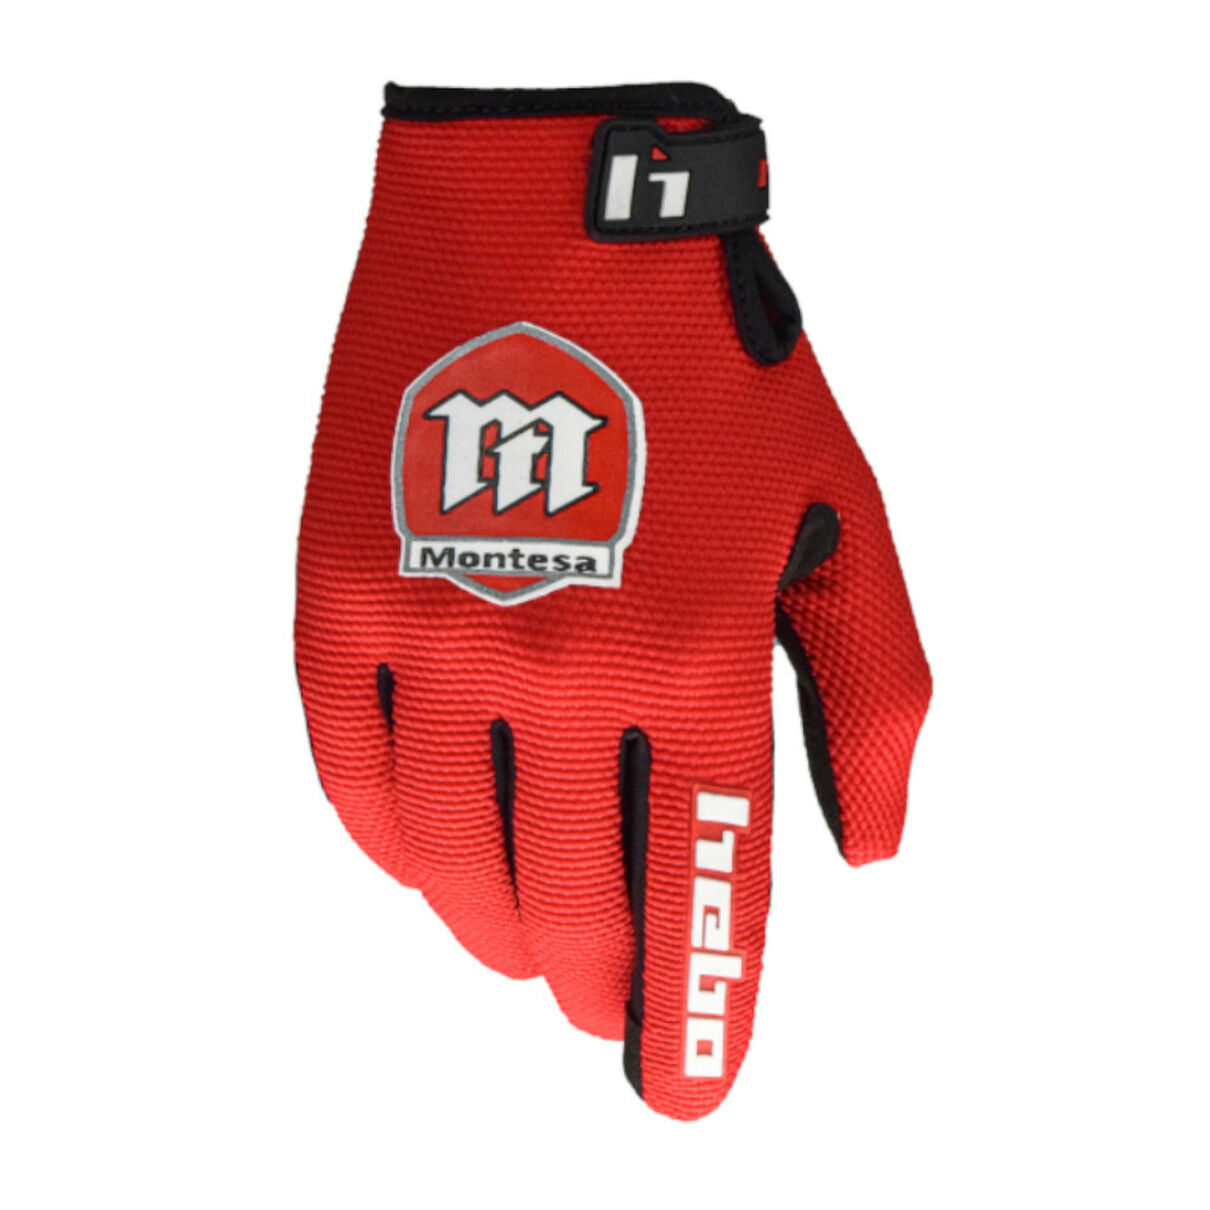 Hebo Trials Glove Montesa Classic